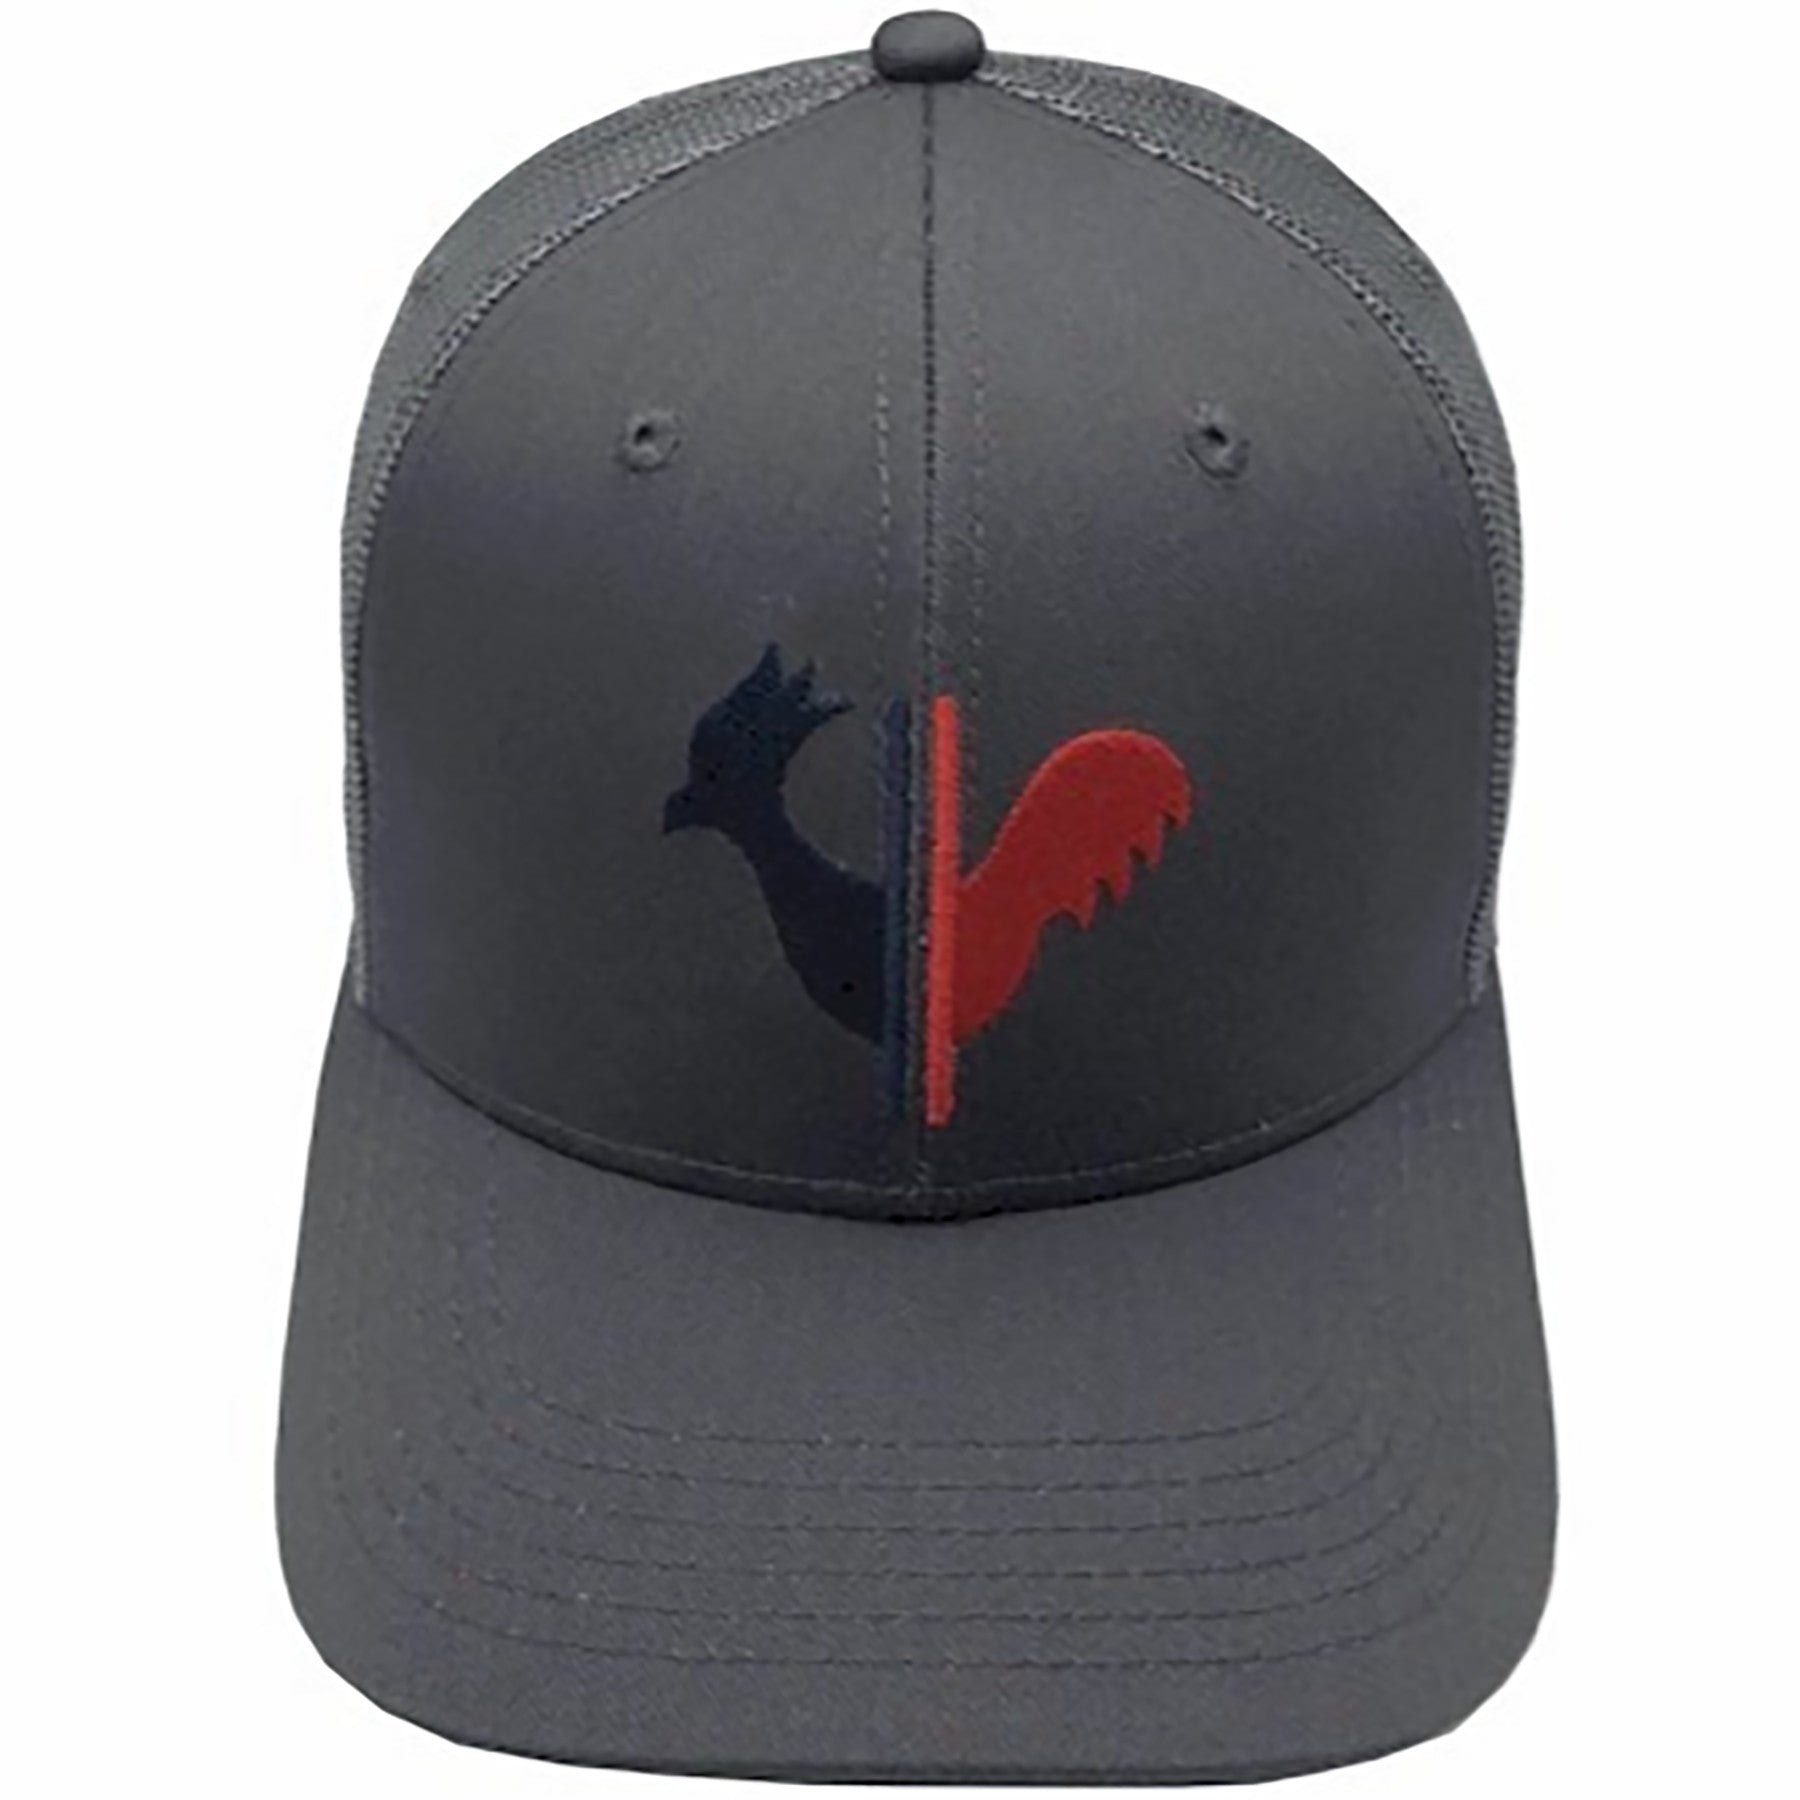 Rossignol ROUGH RIDER CAP BLACK/GRAY Mesh snapback cap One size